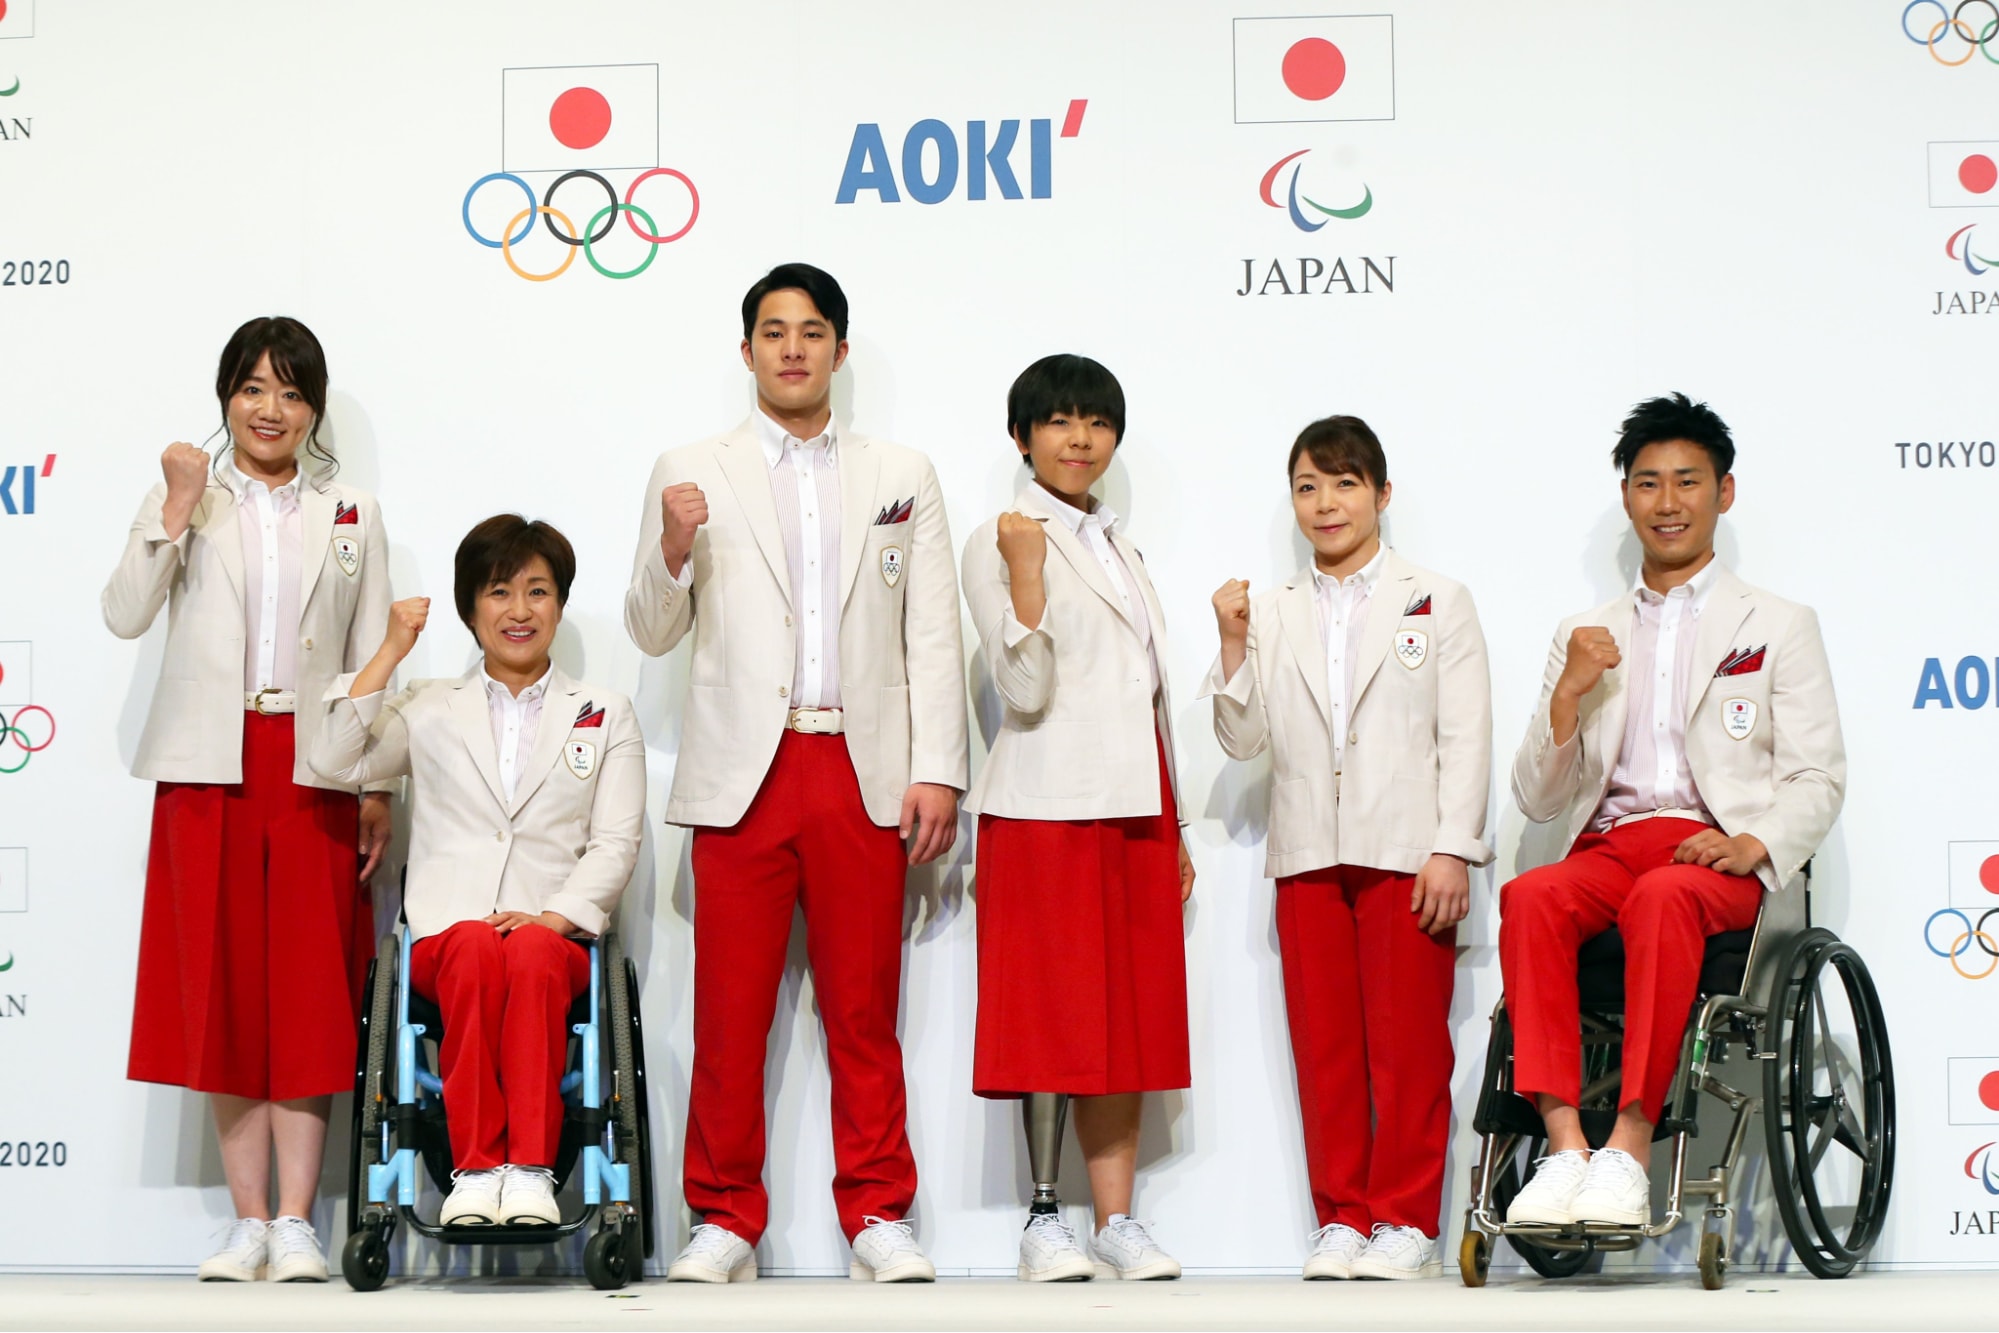 Tokyo Olympics uniforms - team japan uniforms